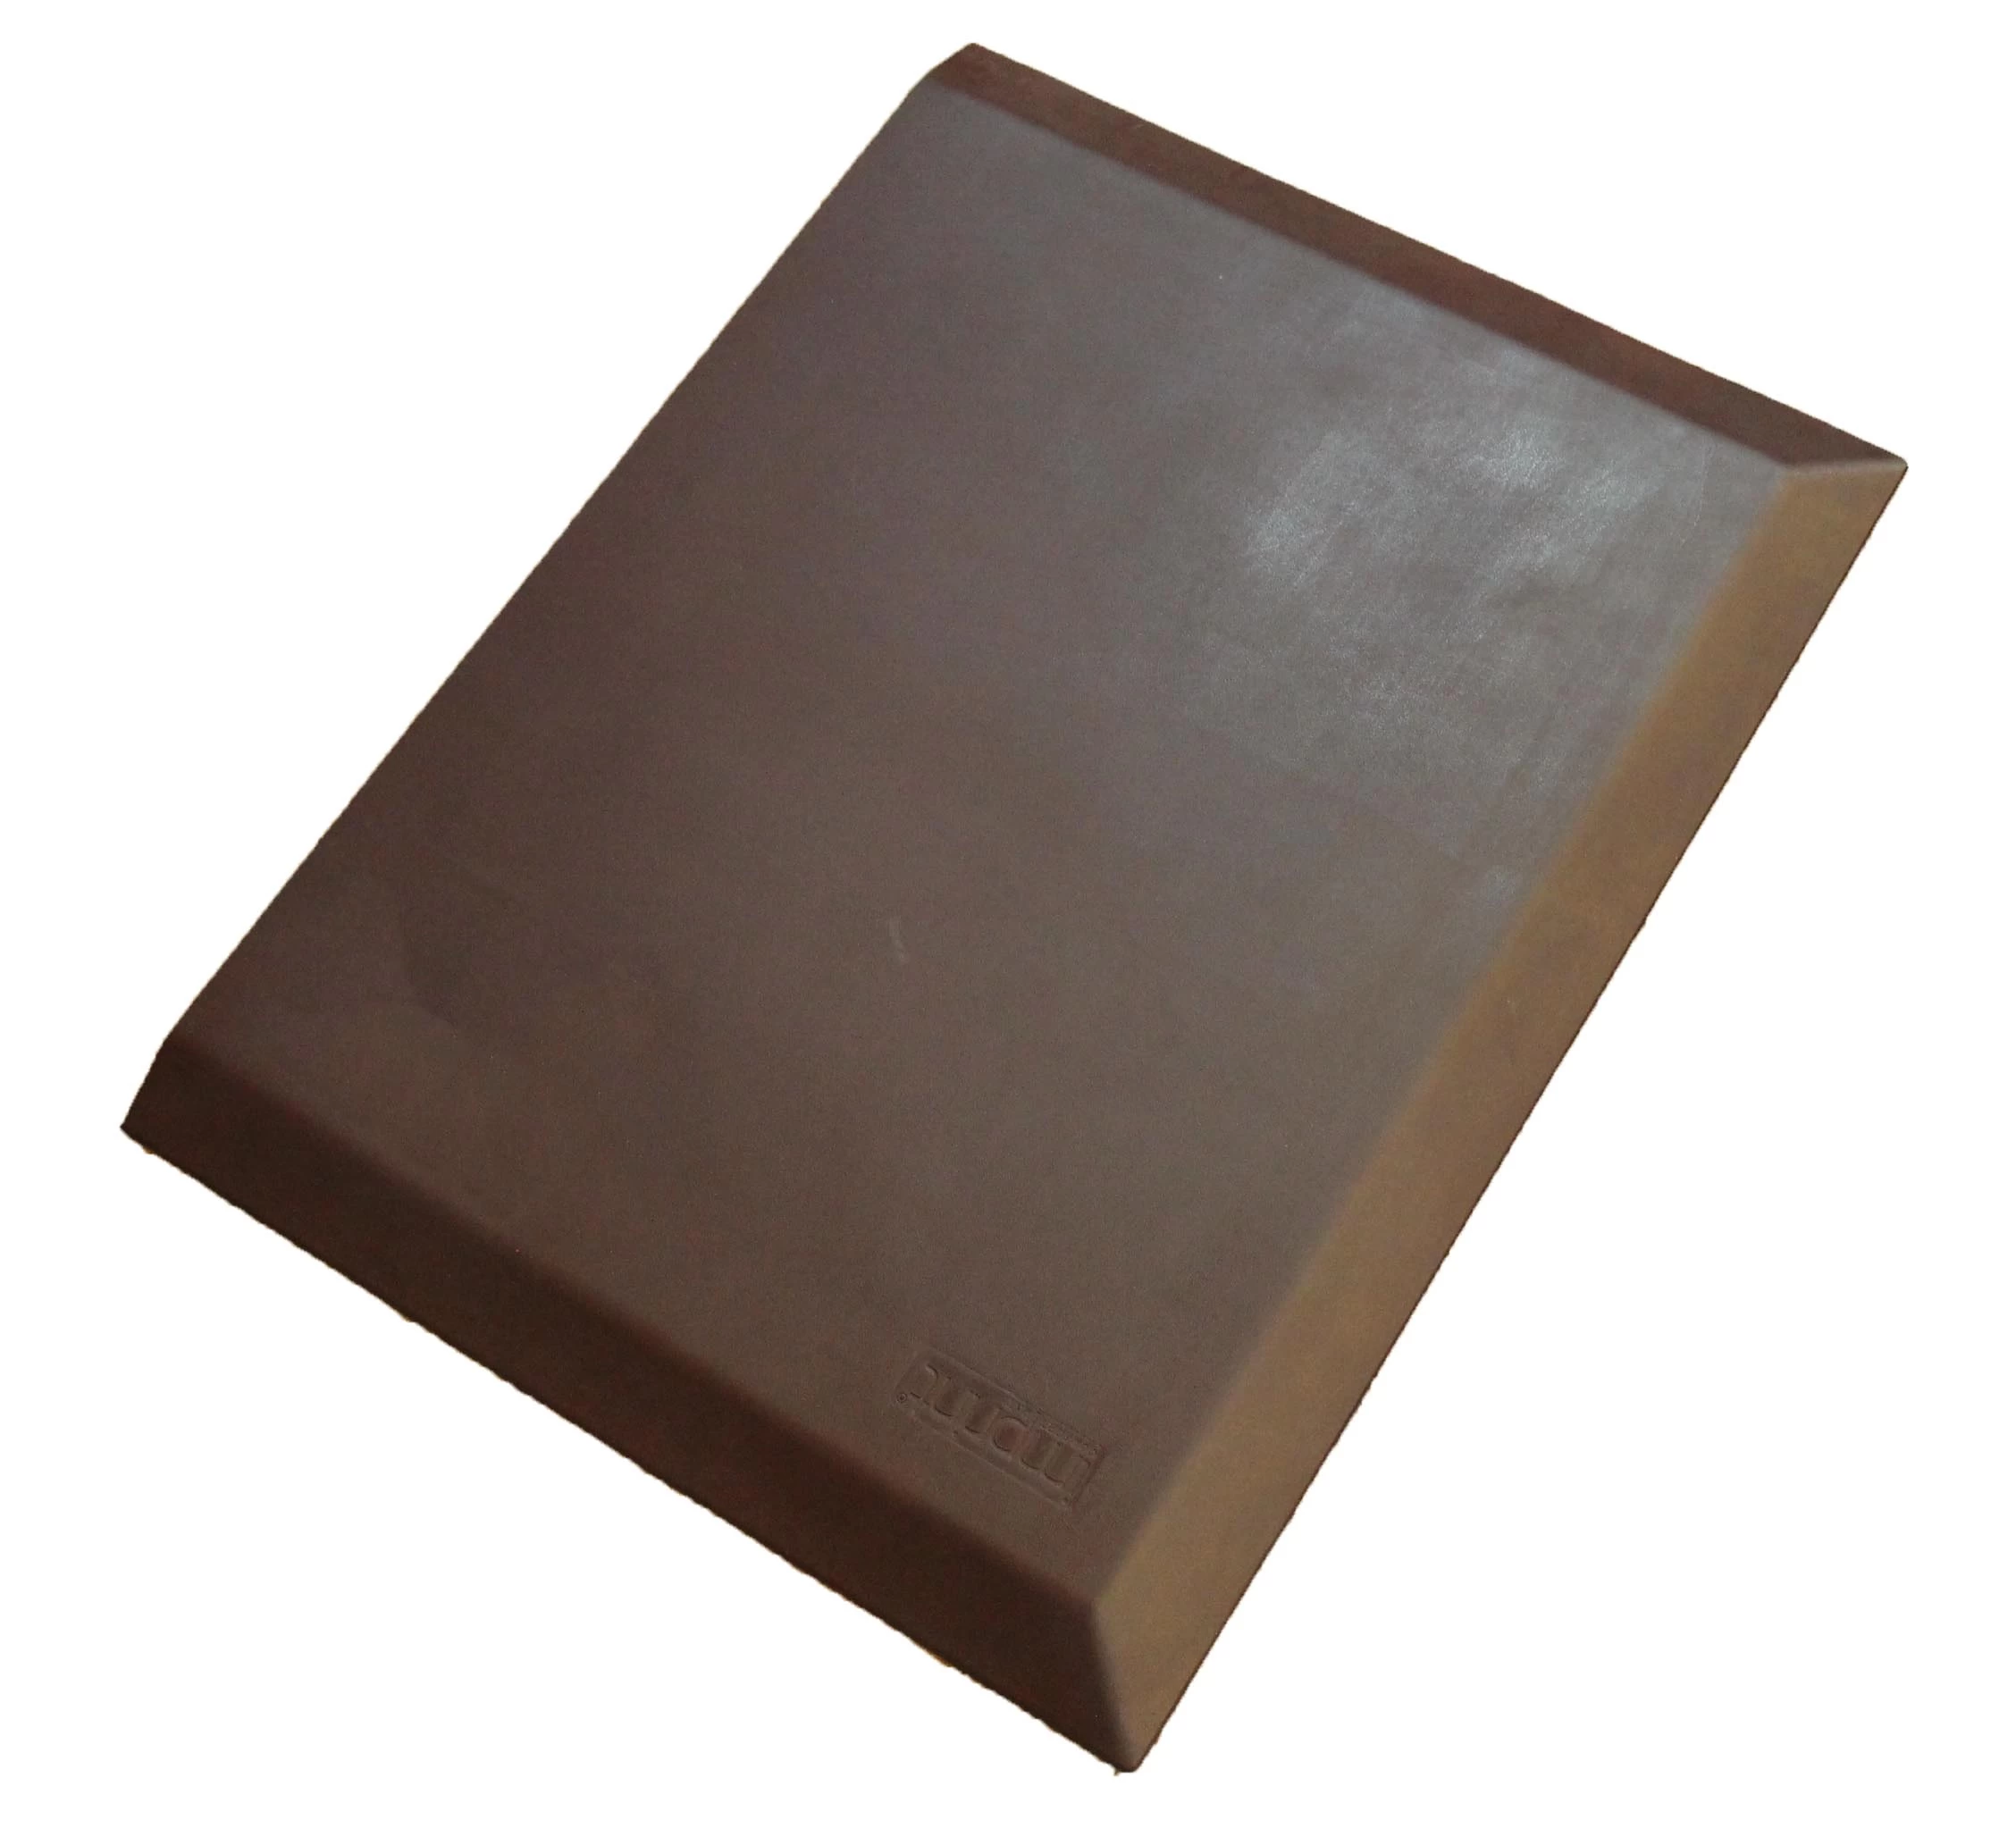 China Integral Skin polyurethane non slip PU floor mat